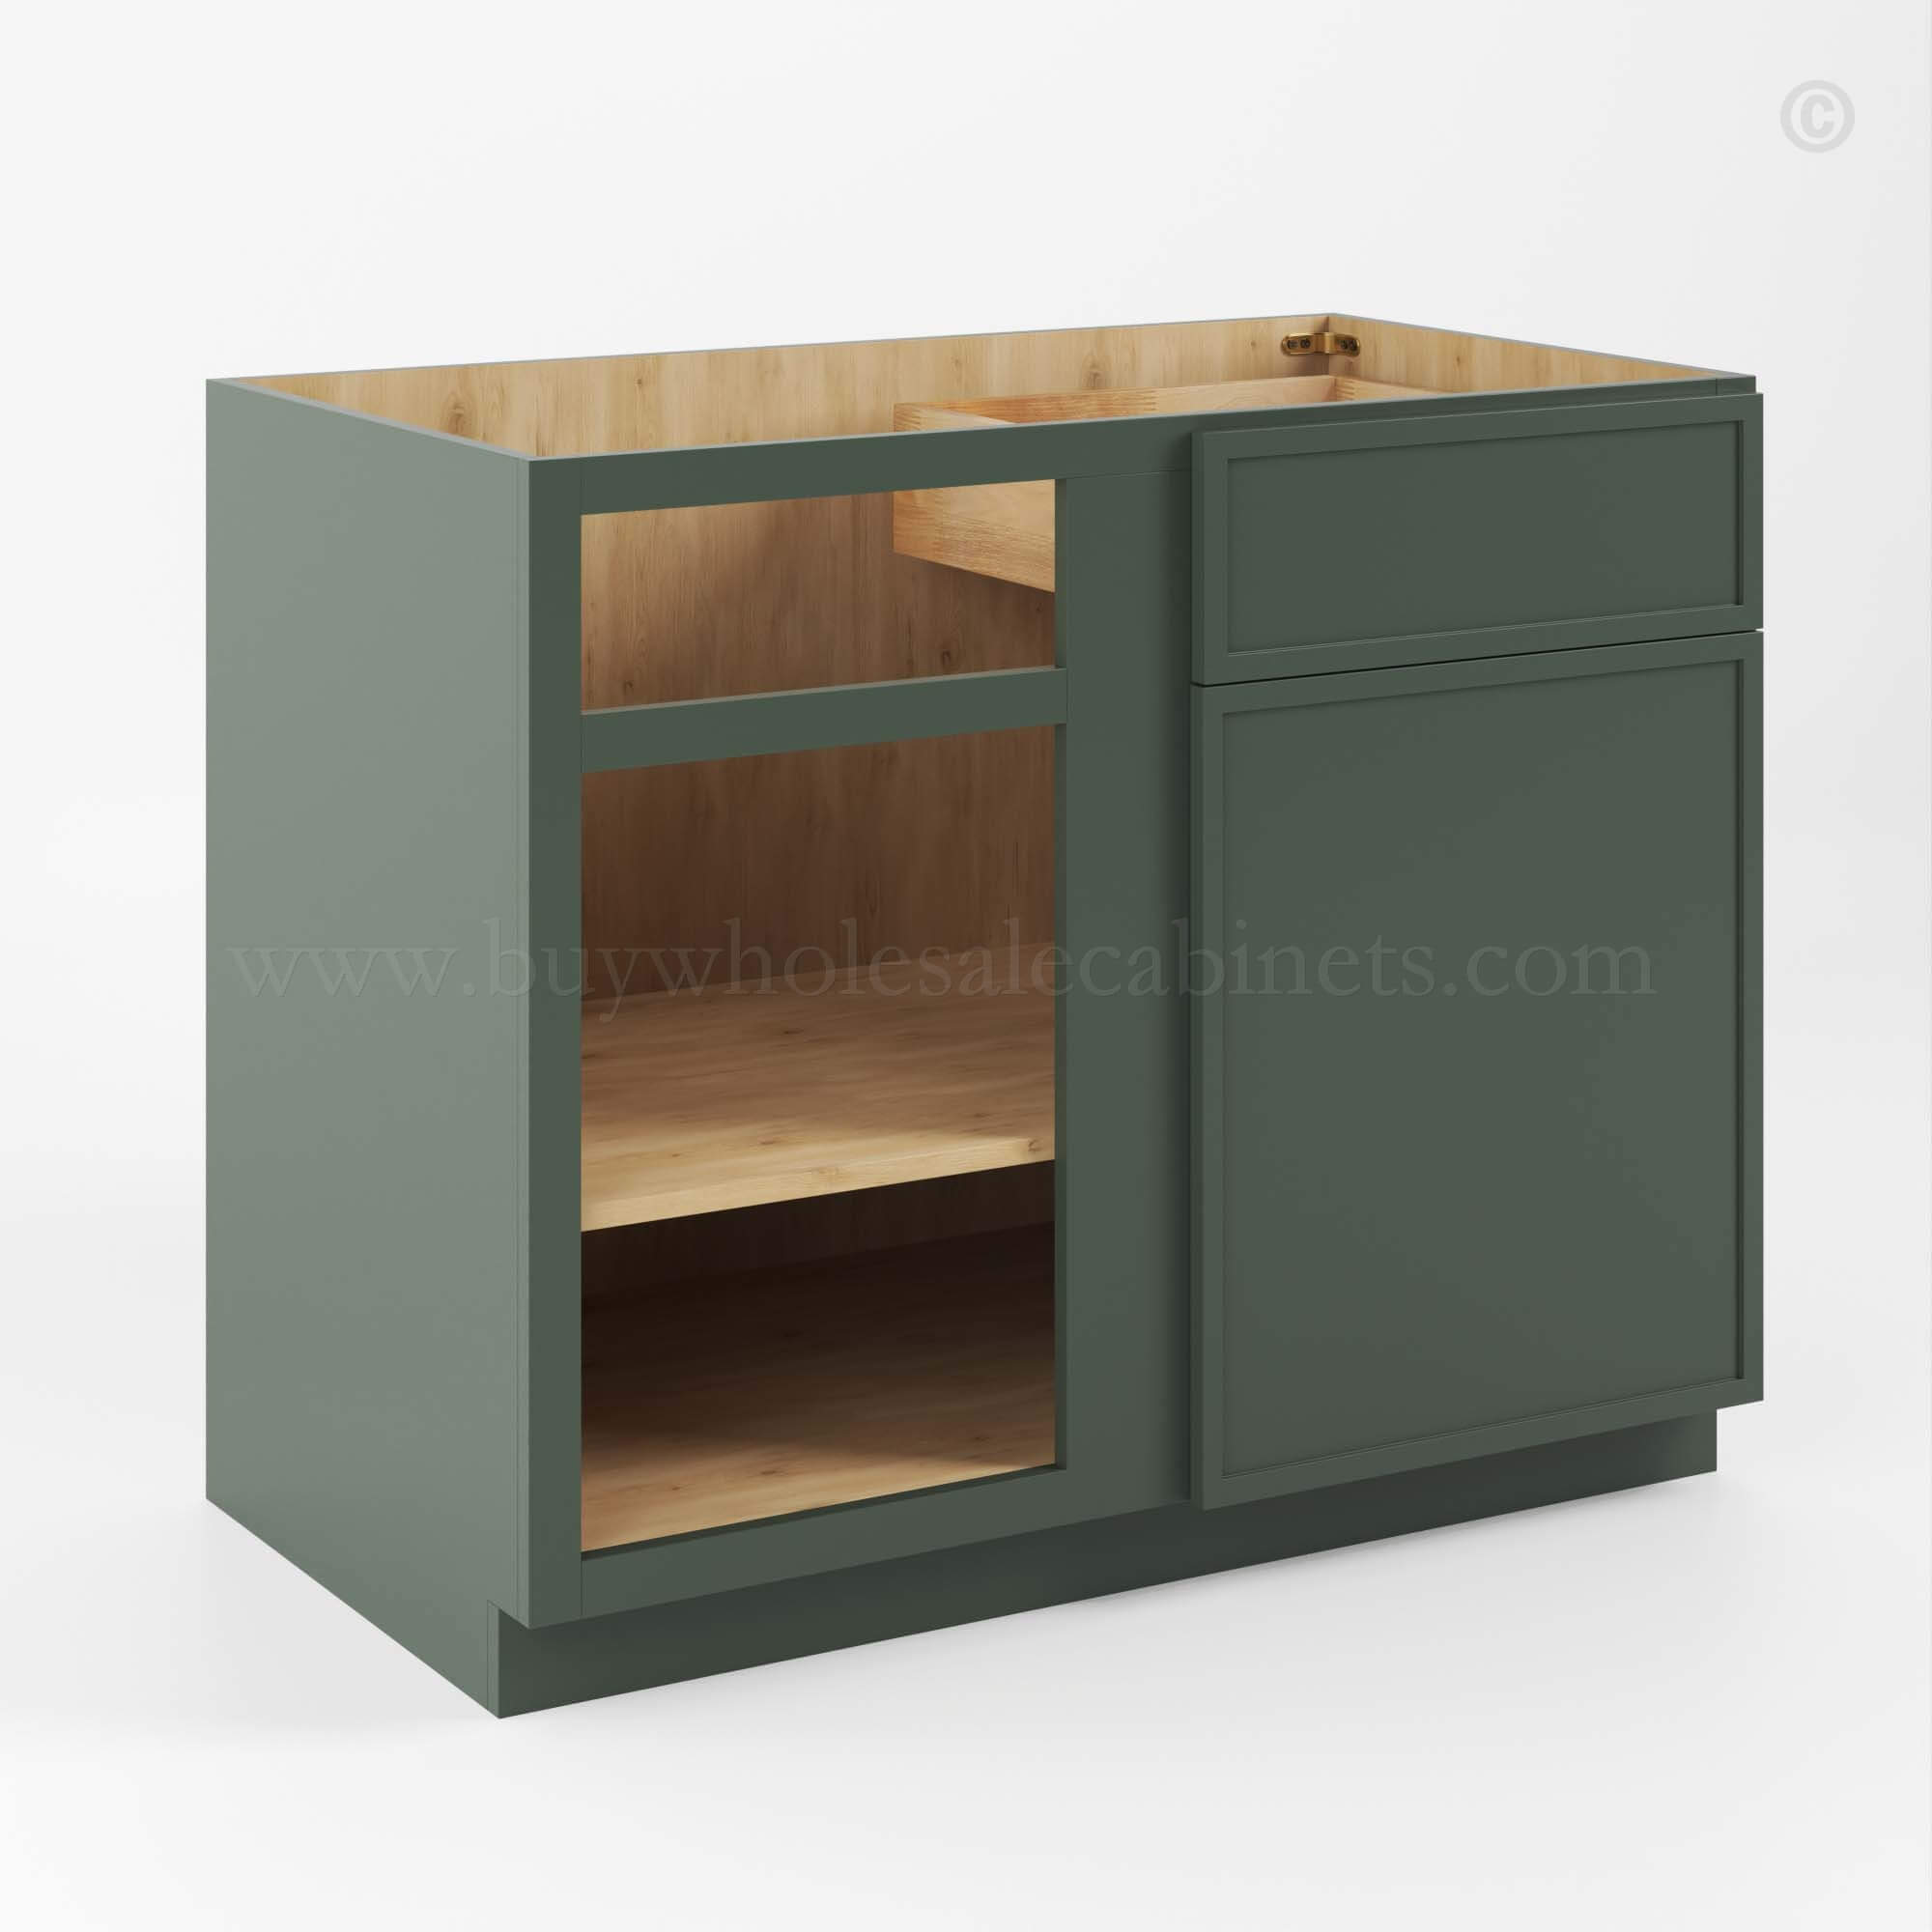 Slim Shaker Green Base Blind Corner Cabinet, rta cabinets, wholesale cabinets